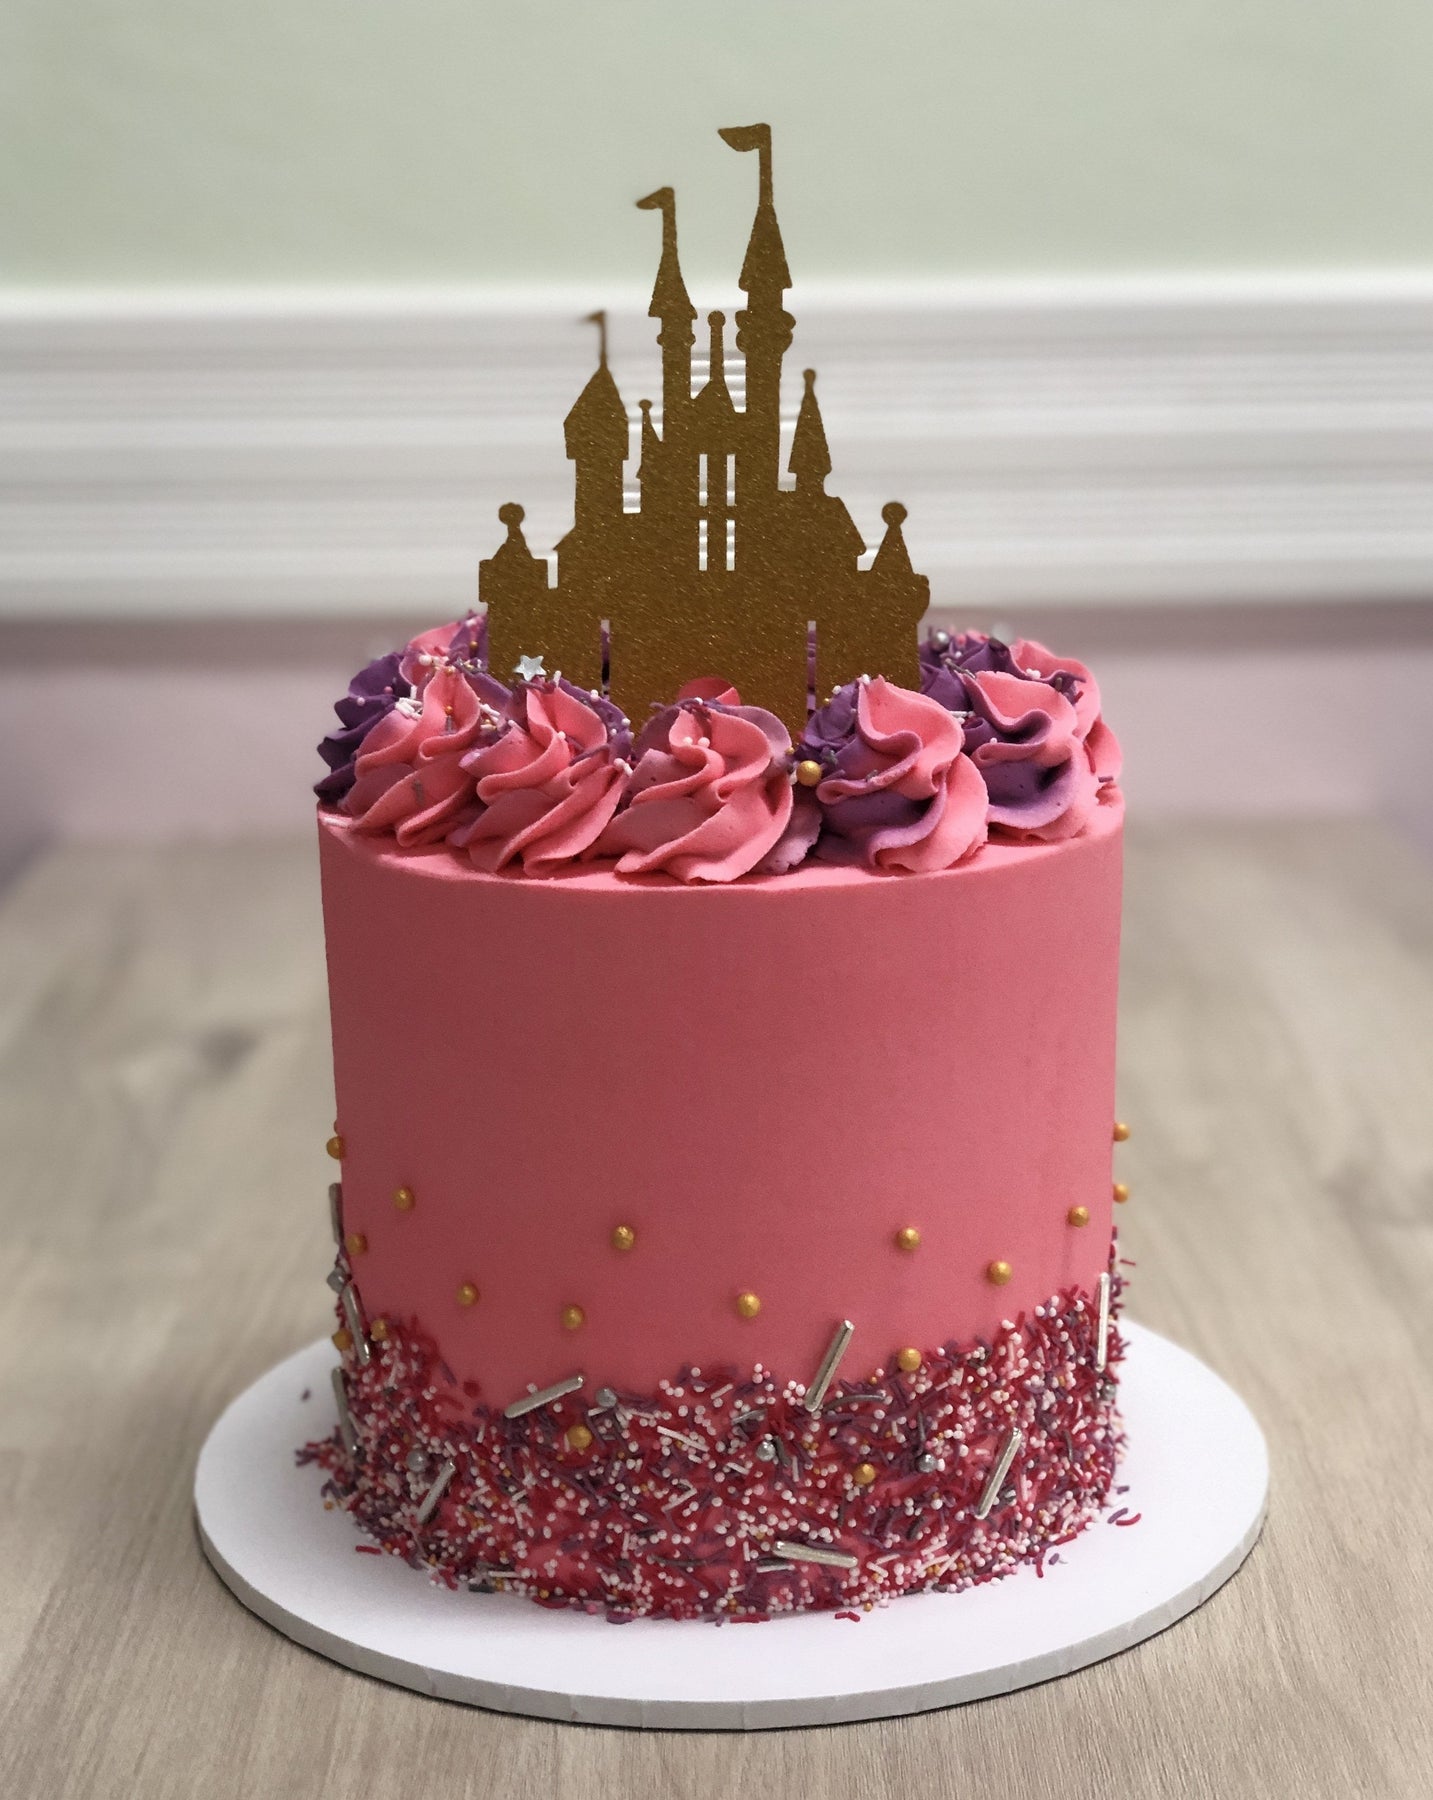 Disney Princess Castle Cake - The Cakery - Leamington Spa & Warwickshire  Cake Boutique